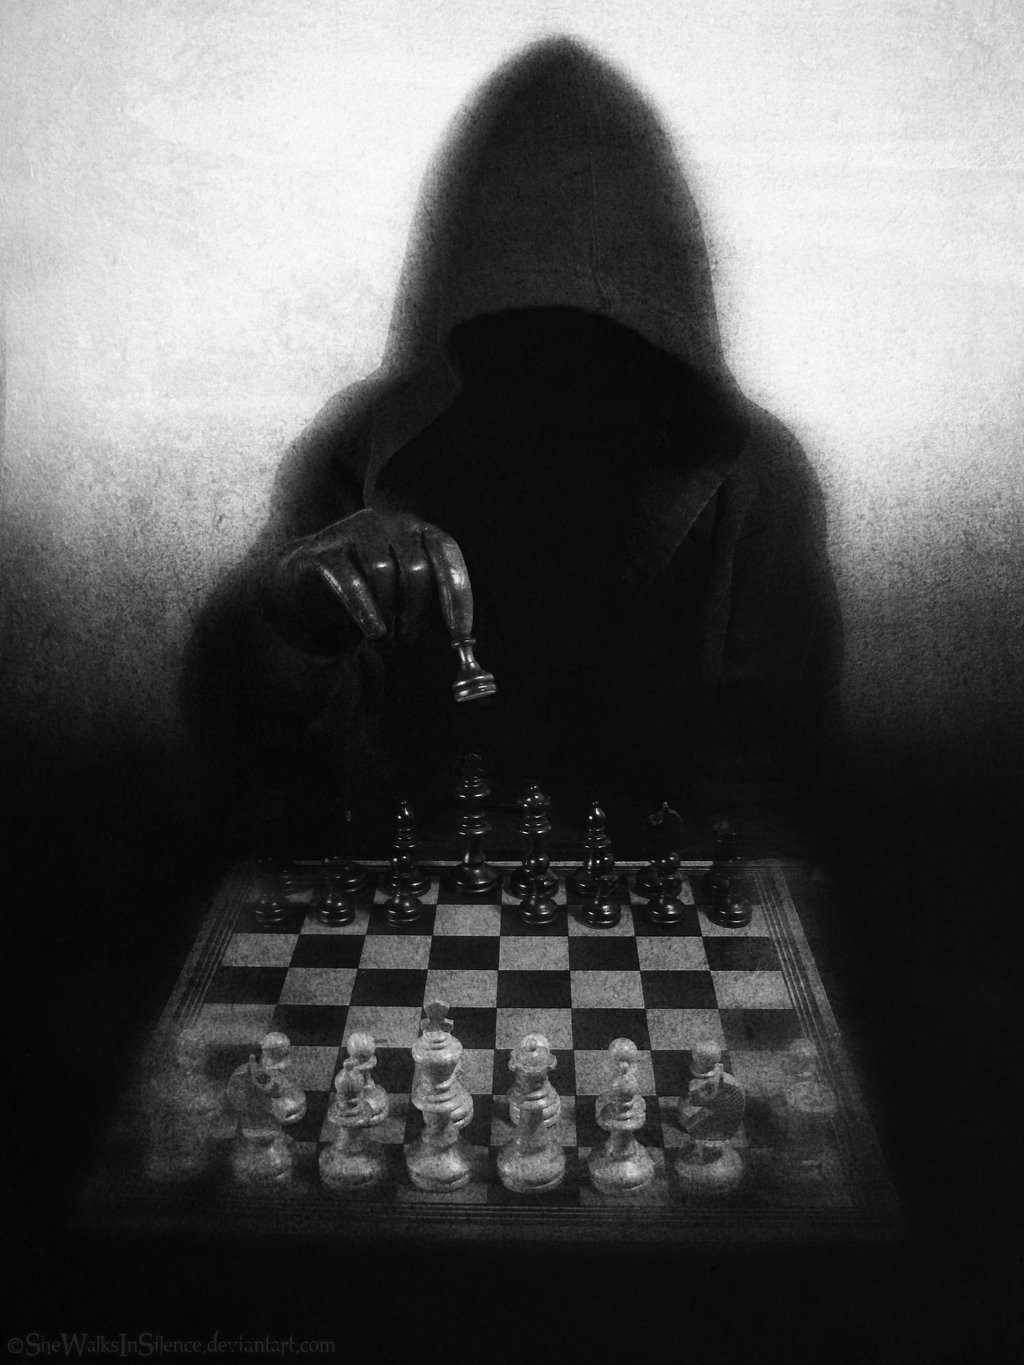 General 1024x1365 digital art Grim Reaper death dark monochrome creepy chess board games pawns hoods portrait display DeviantArt